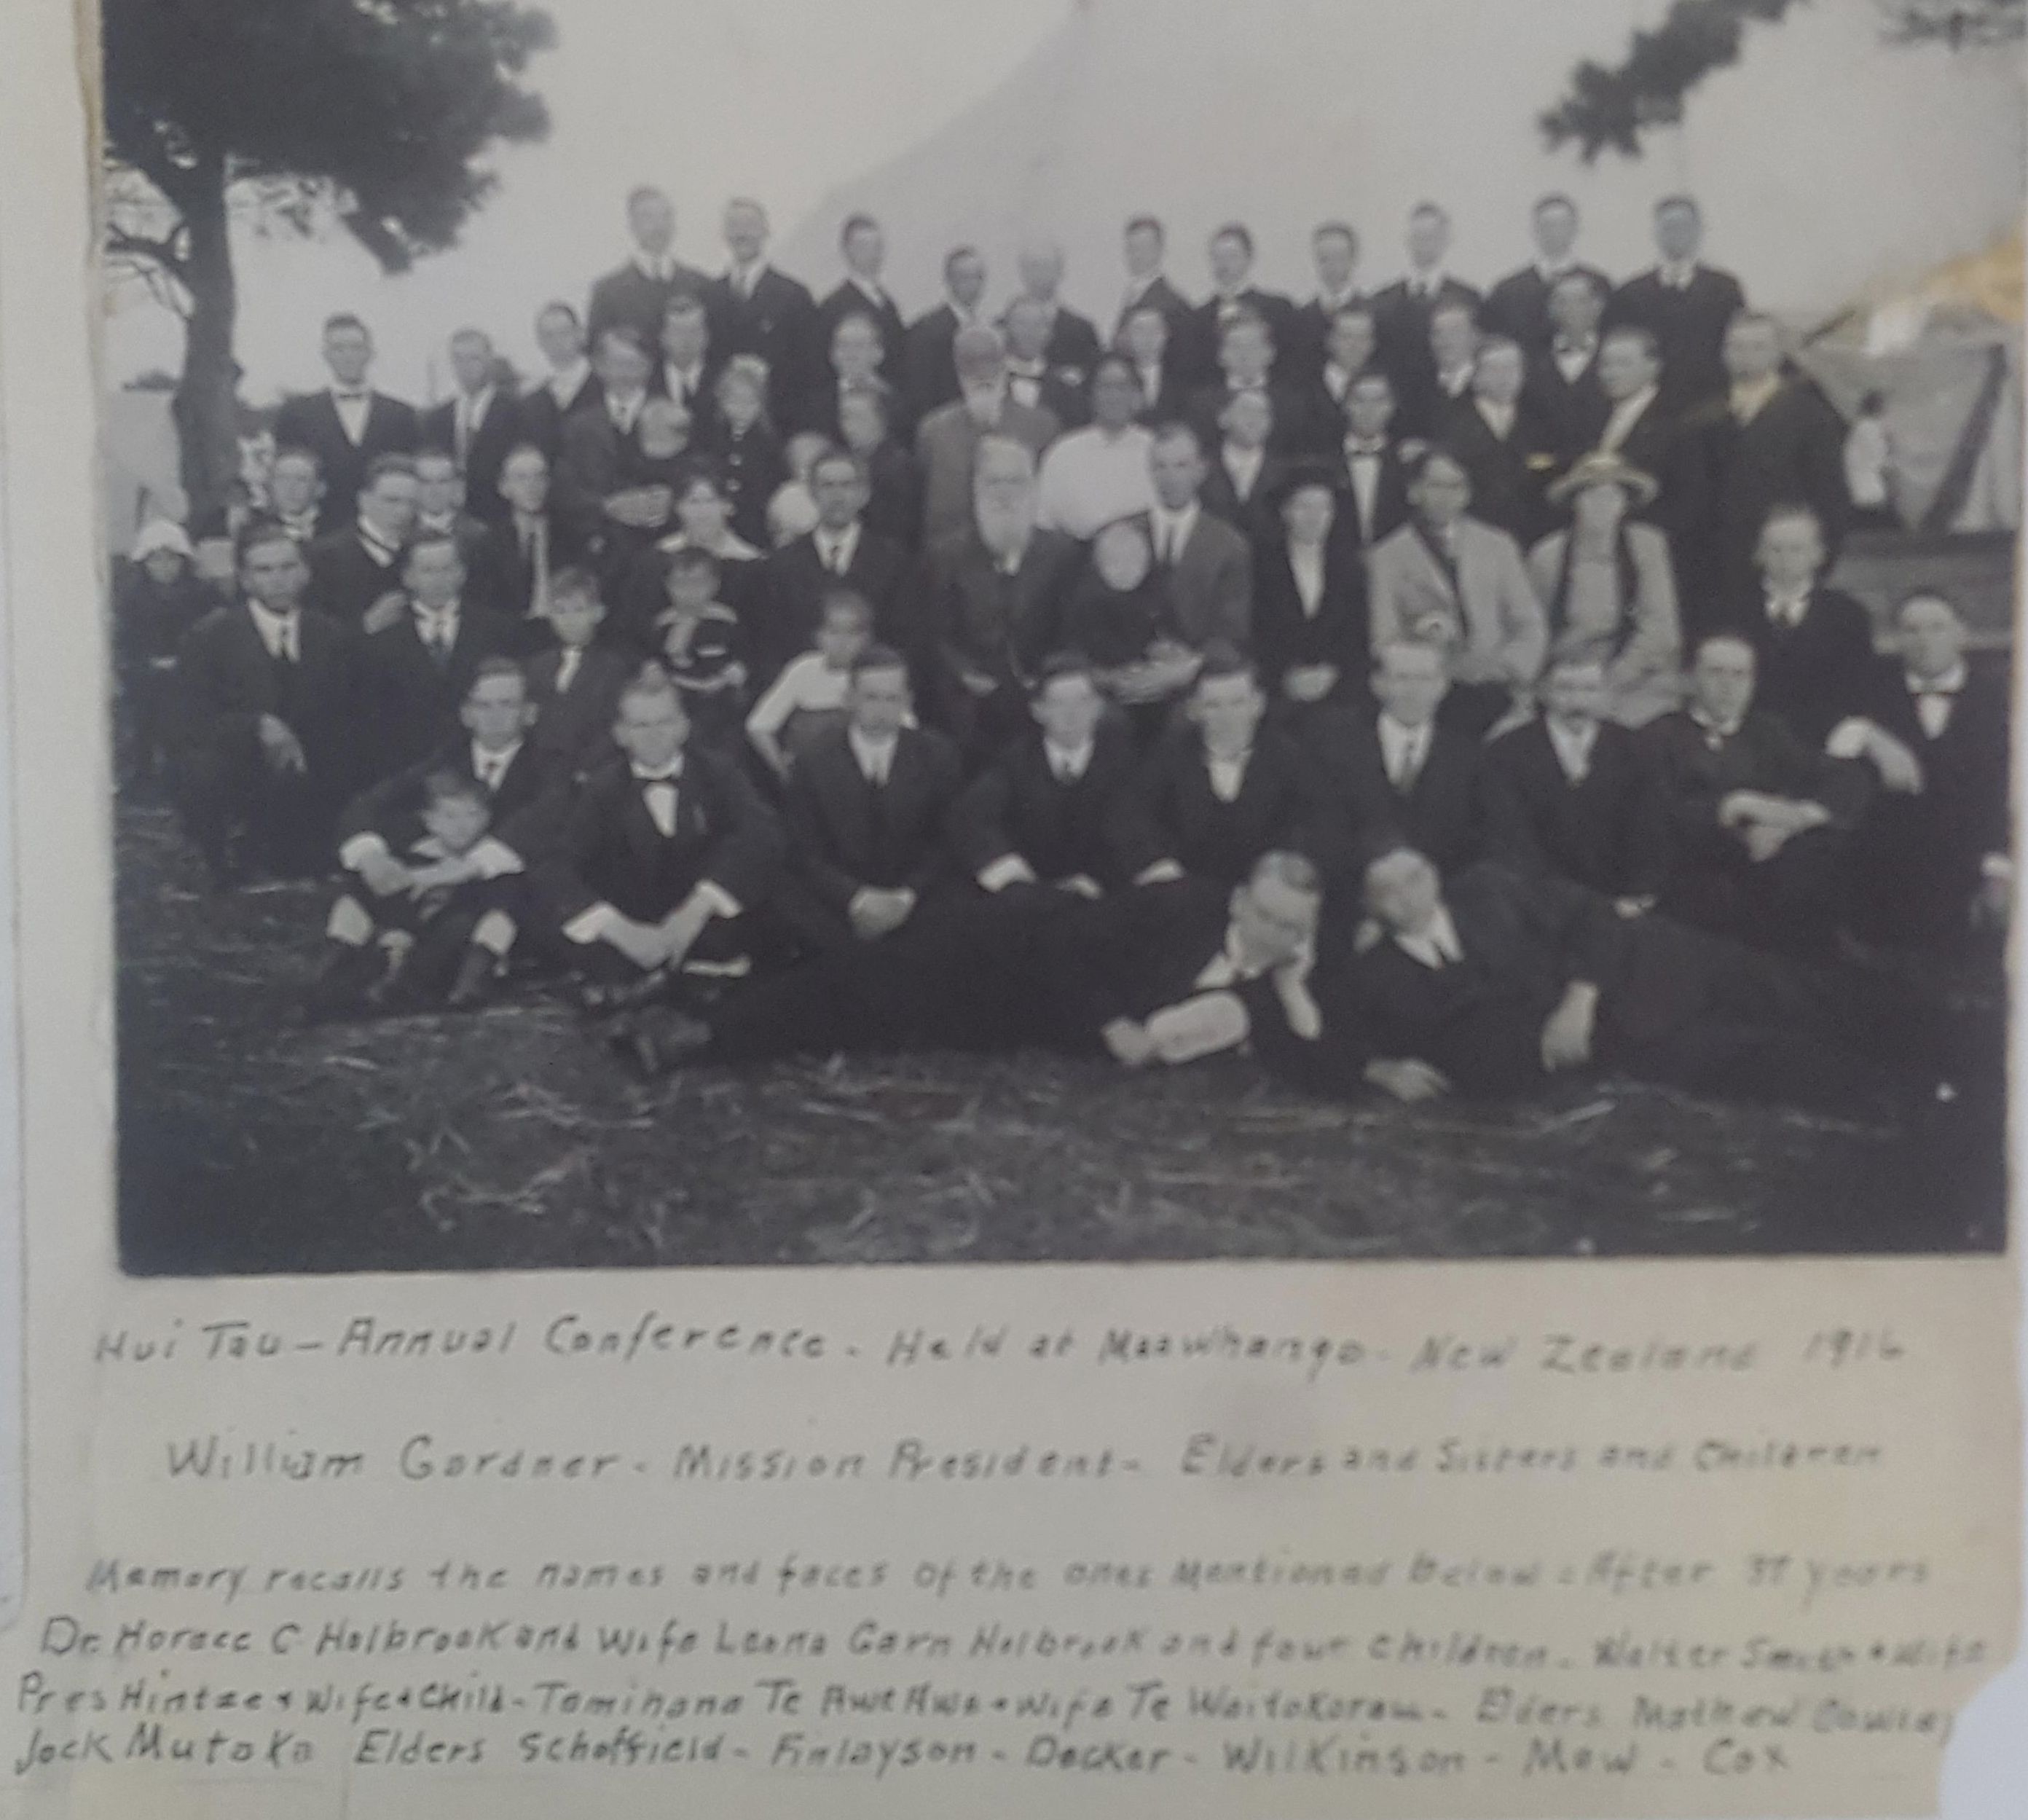 Hui Tau Annual Conference, New Zealand, 1916